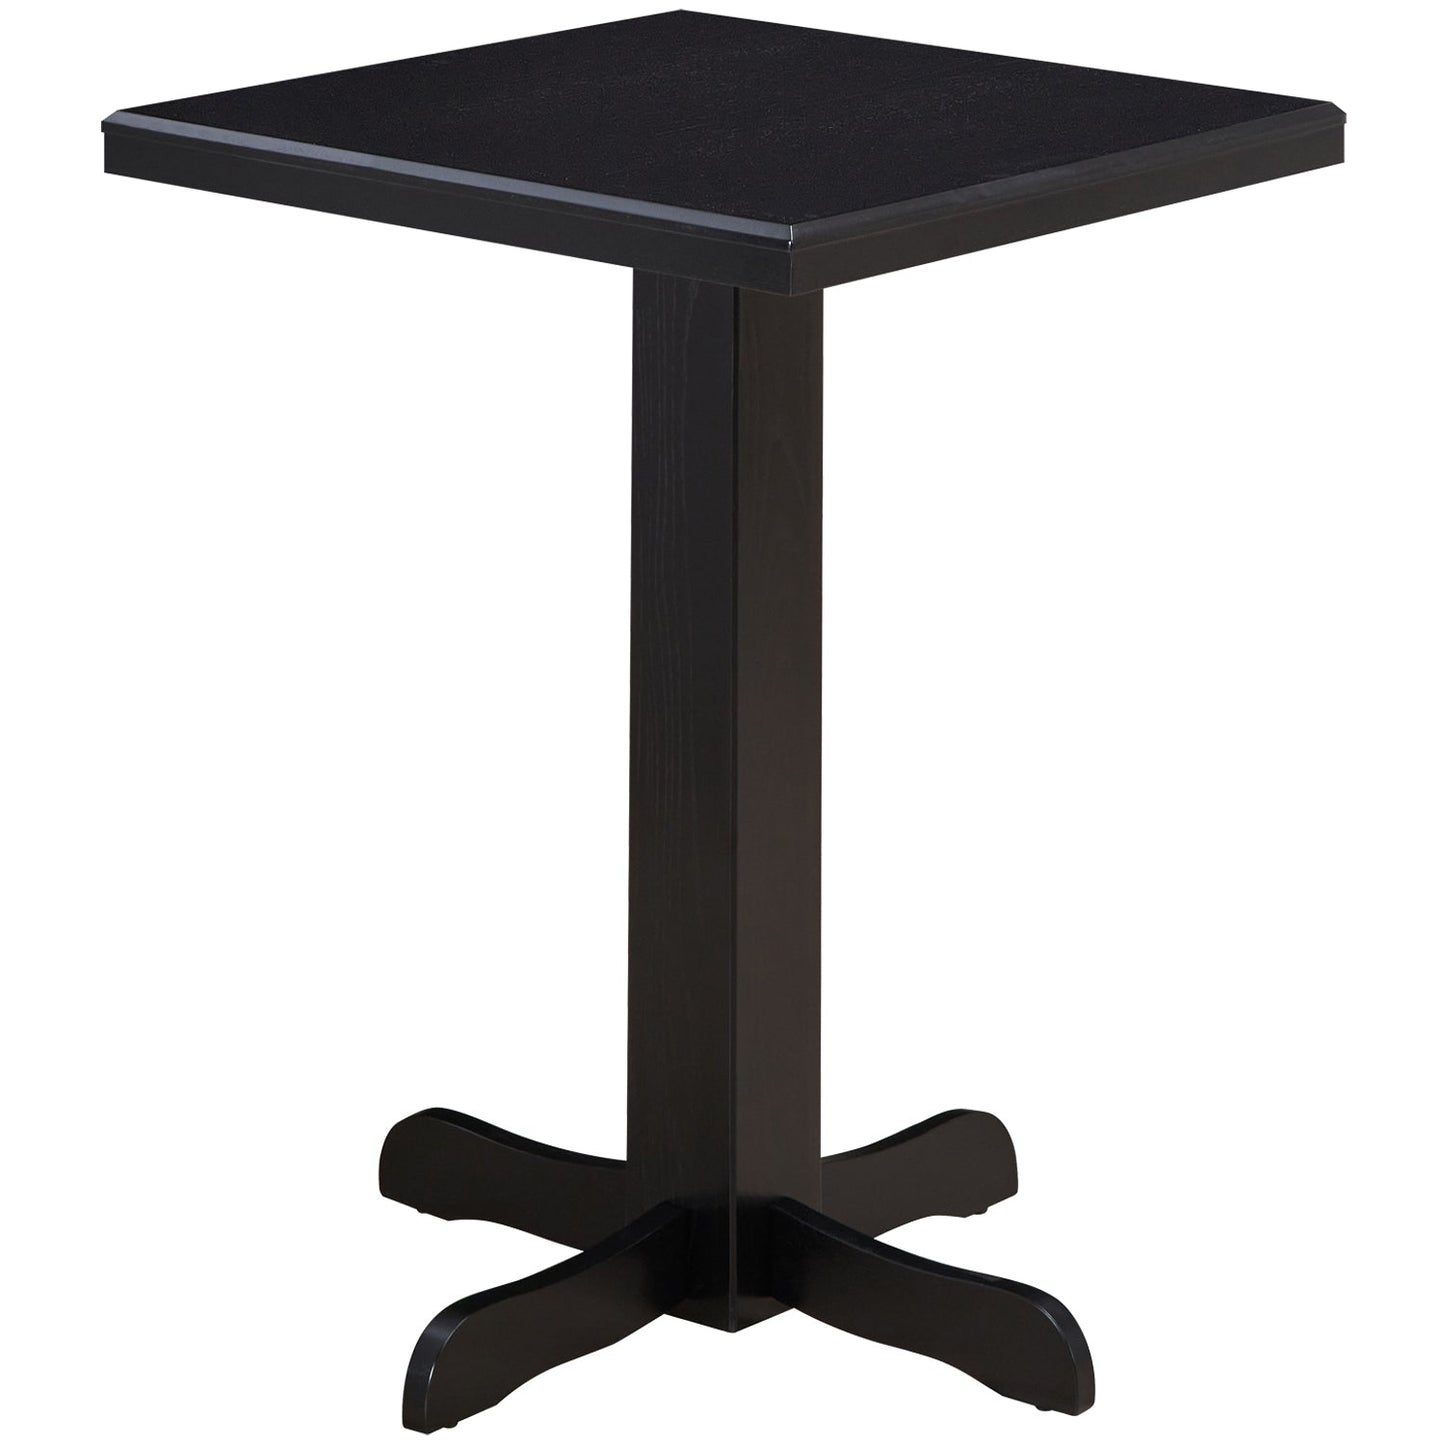 RAM Game Room Square Pub Table - Black - The Bar Design